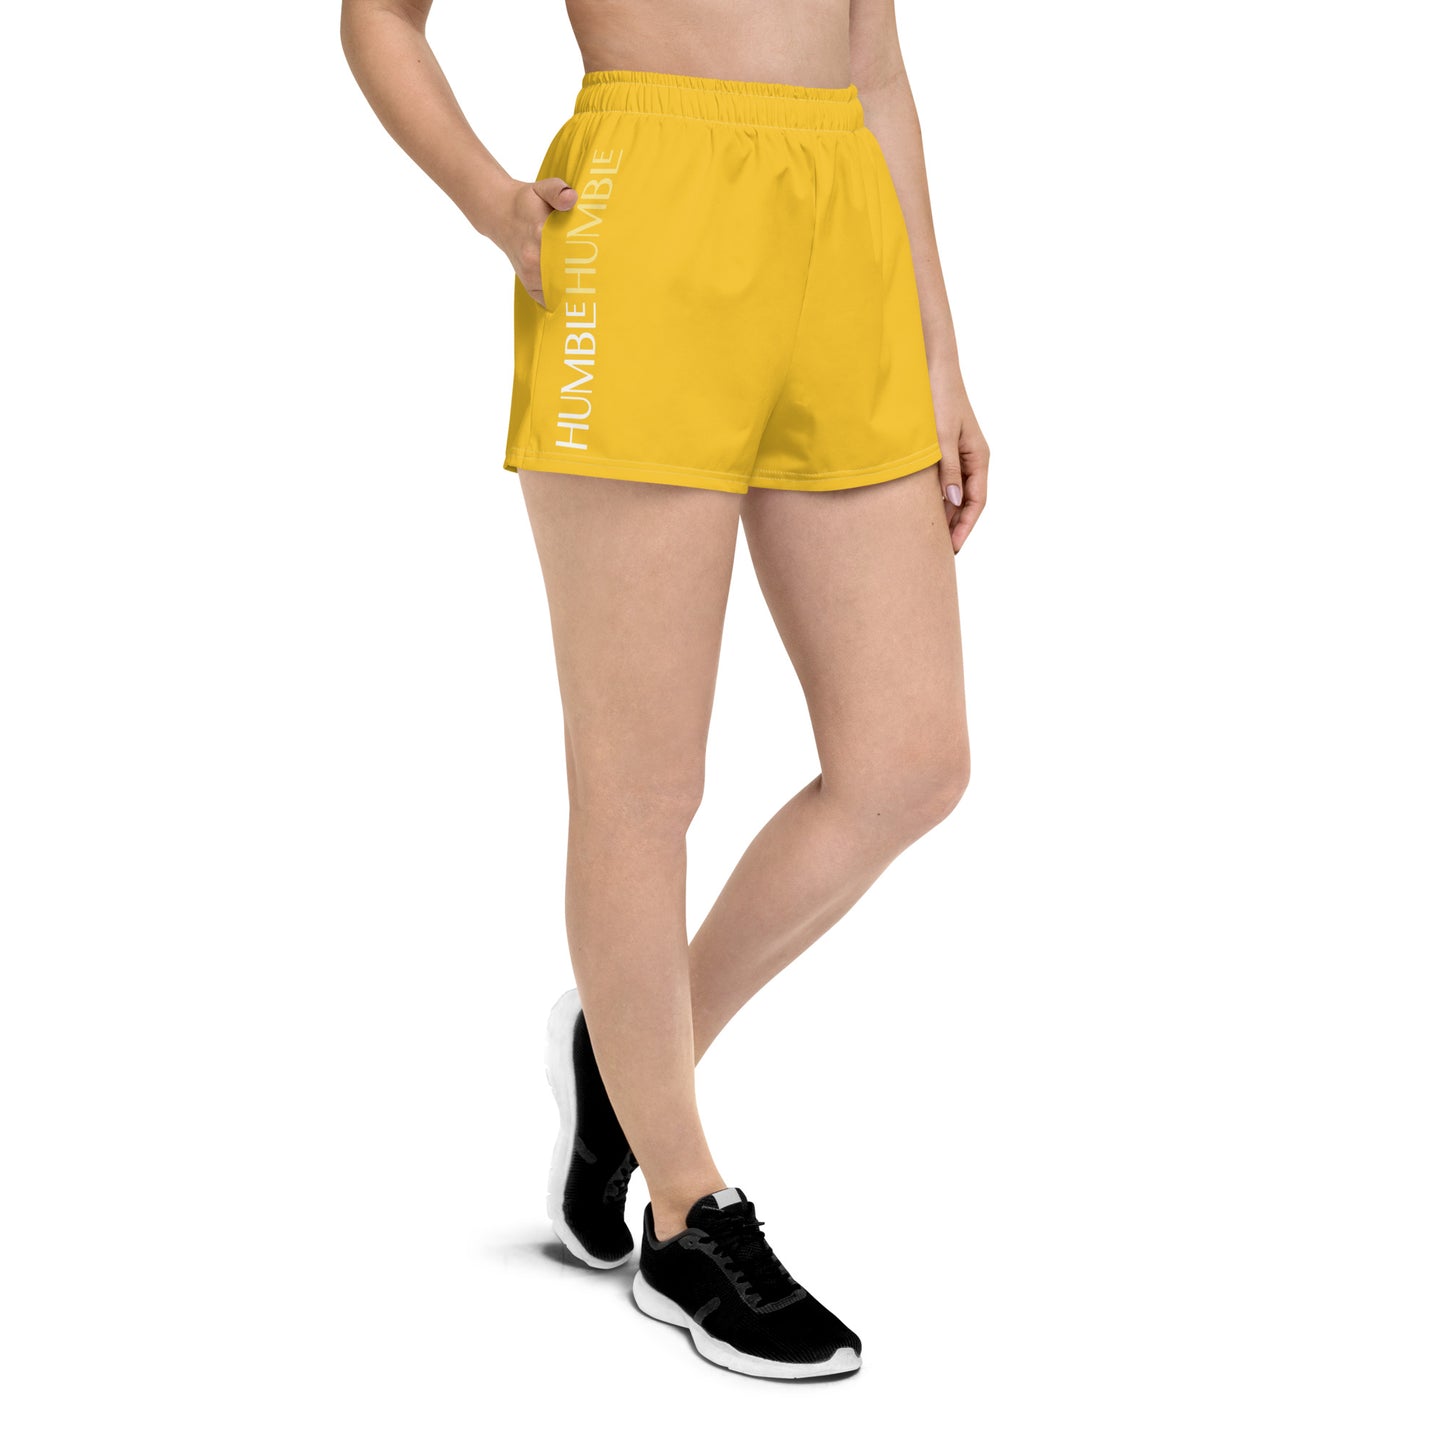 Humble Sportswear, women’s color match shorts, women’s bottoms, eco-friendly active shorts